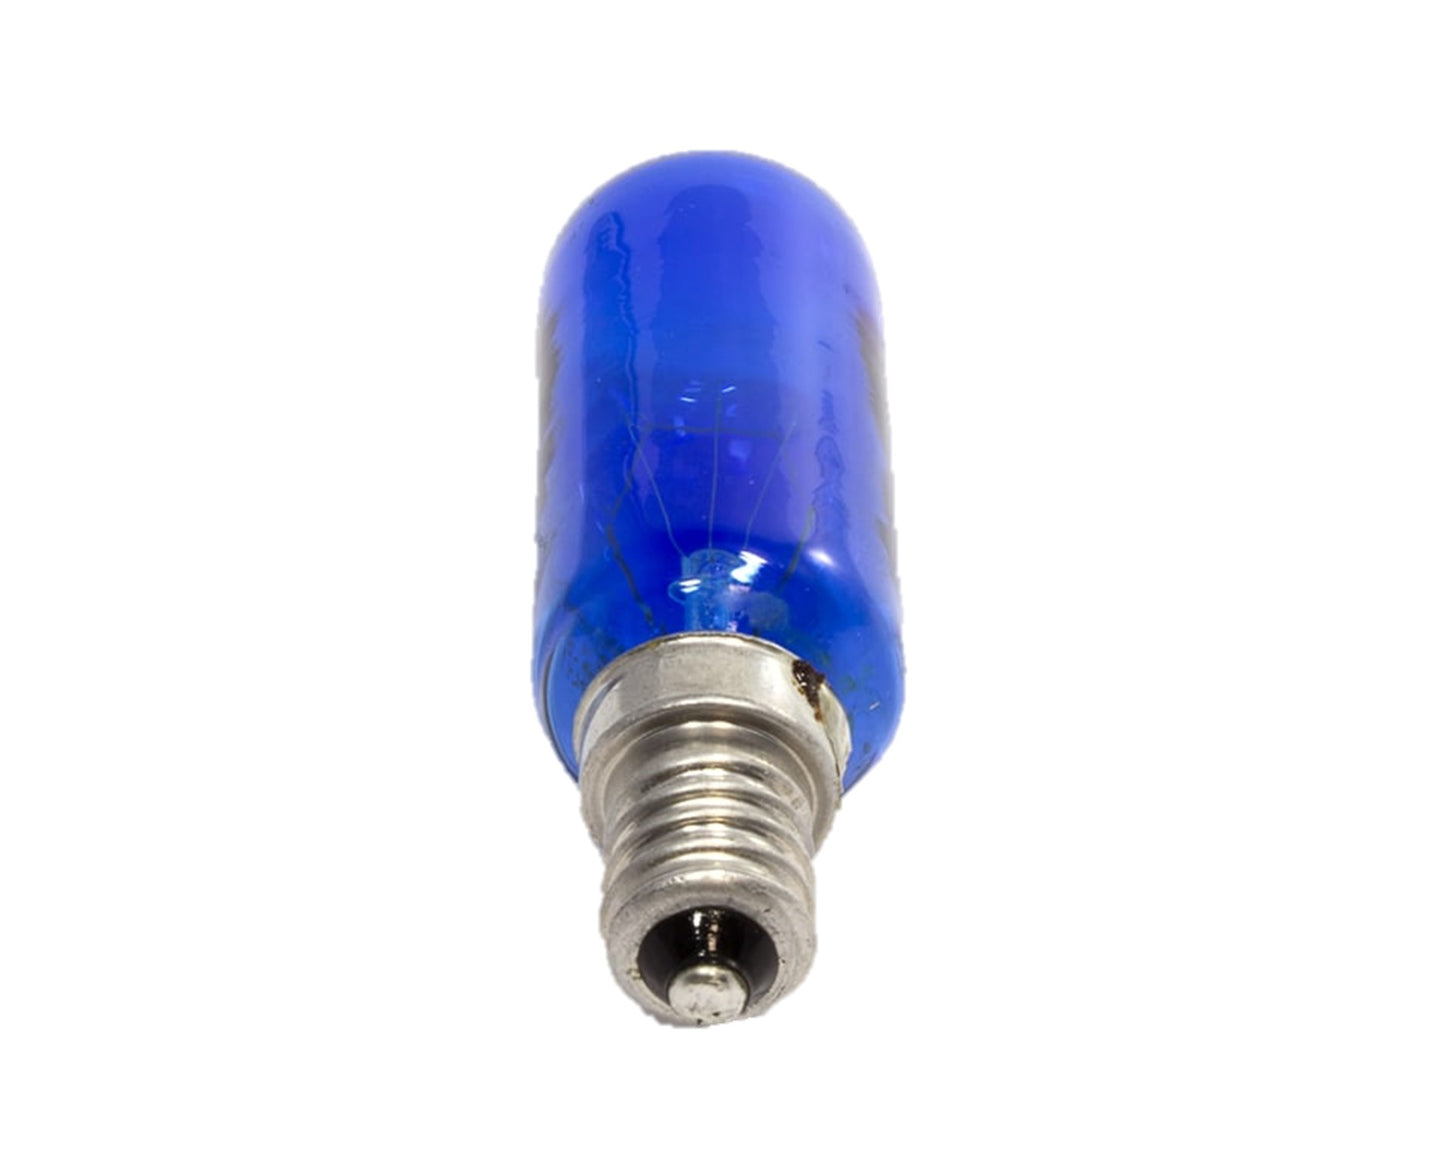 Refrigerator Fridge Lamp Bulb for Bosch Fridge Freezer 25W E14 SES Blue - 612235, 00612235, ES1220347